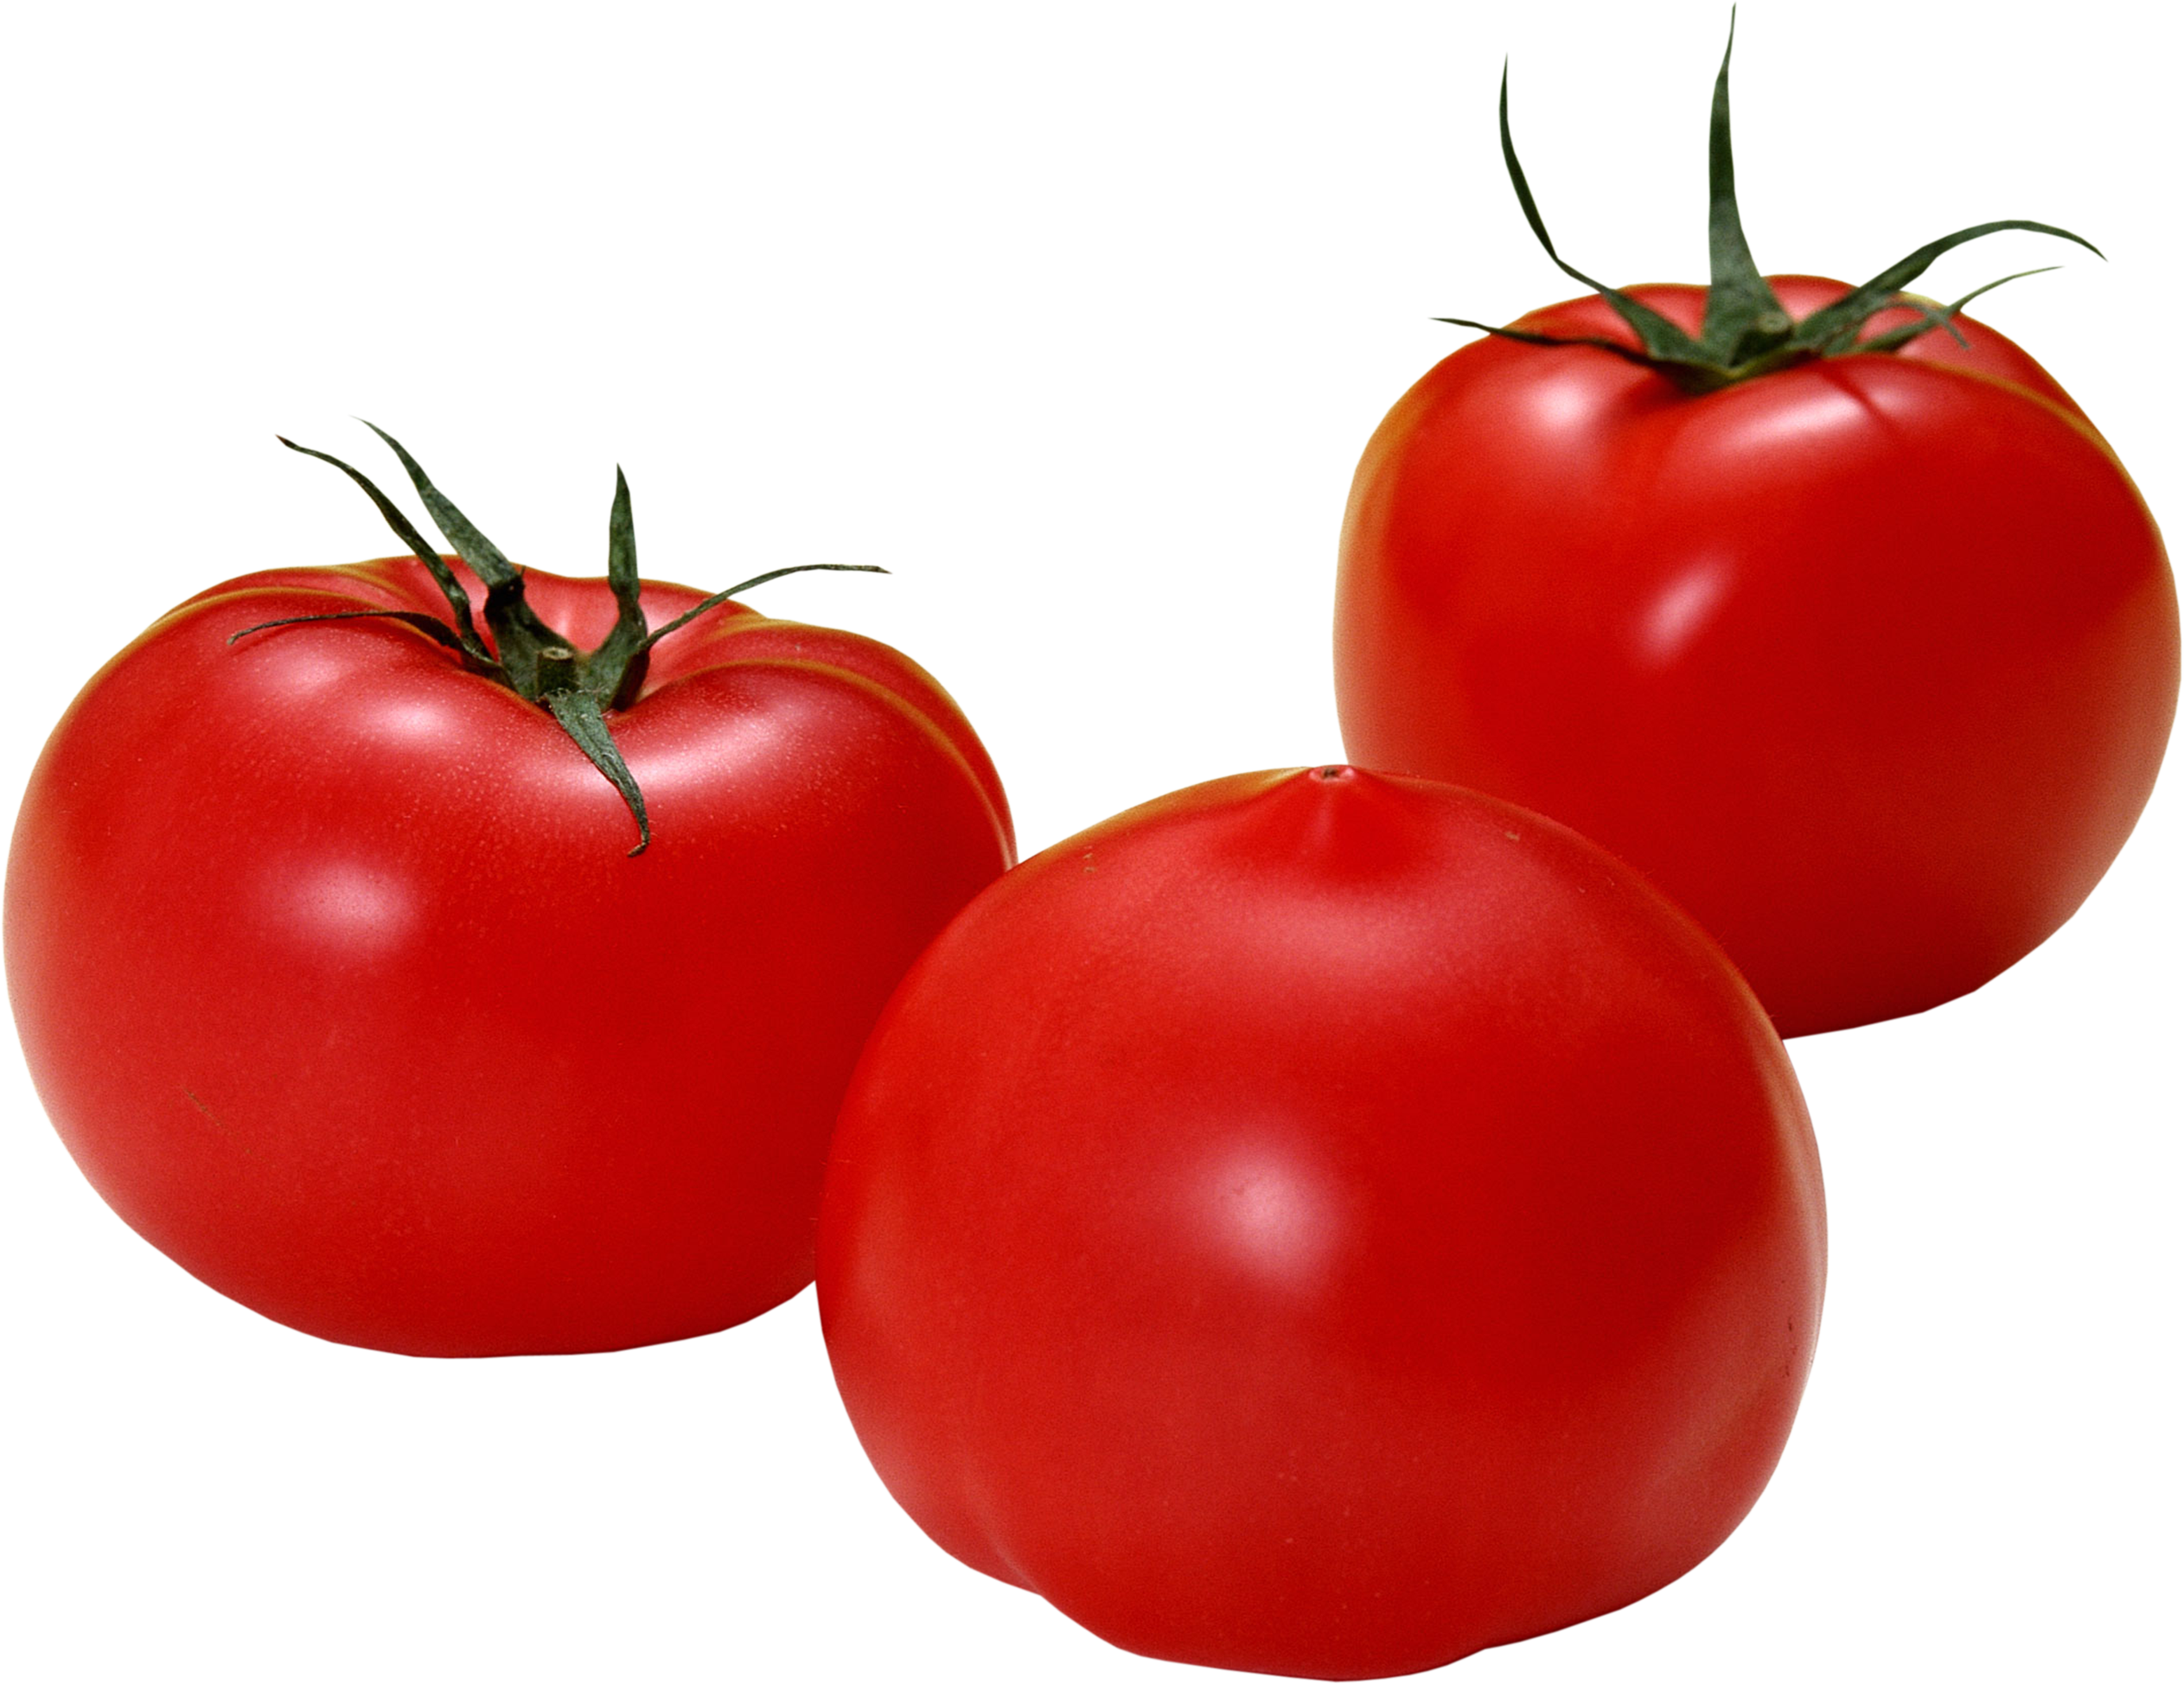 3 tomates vermelhos